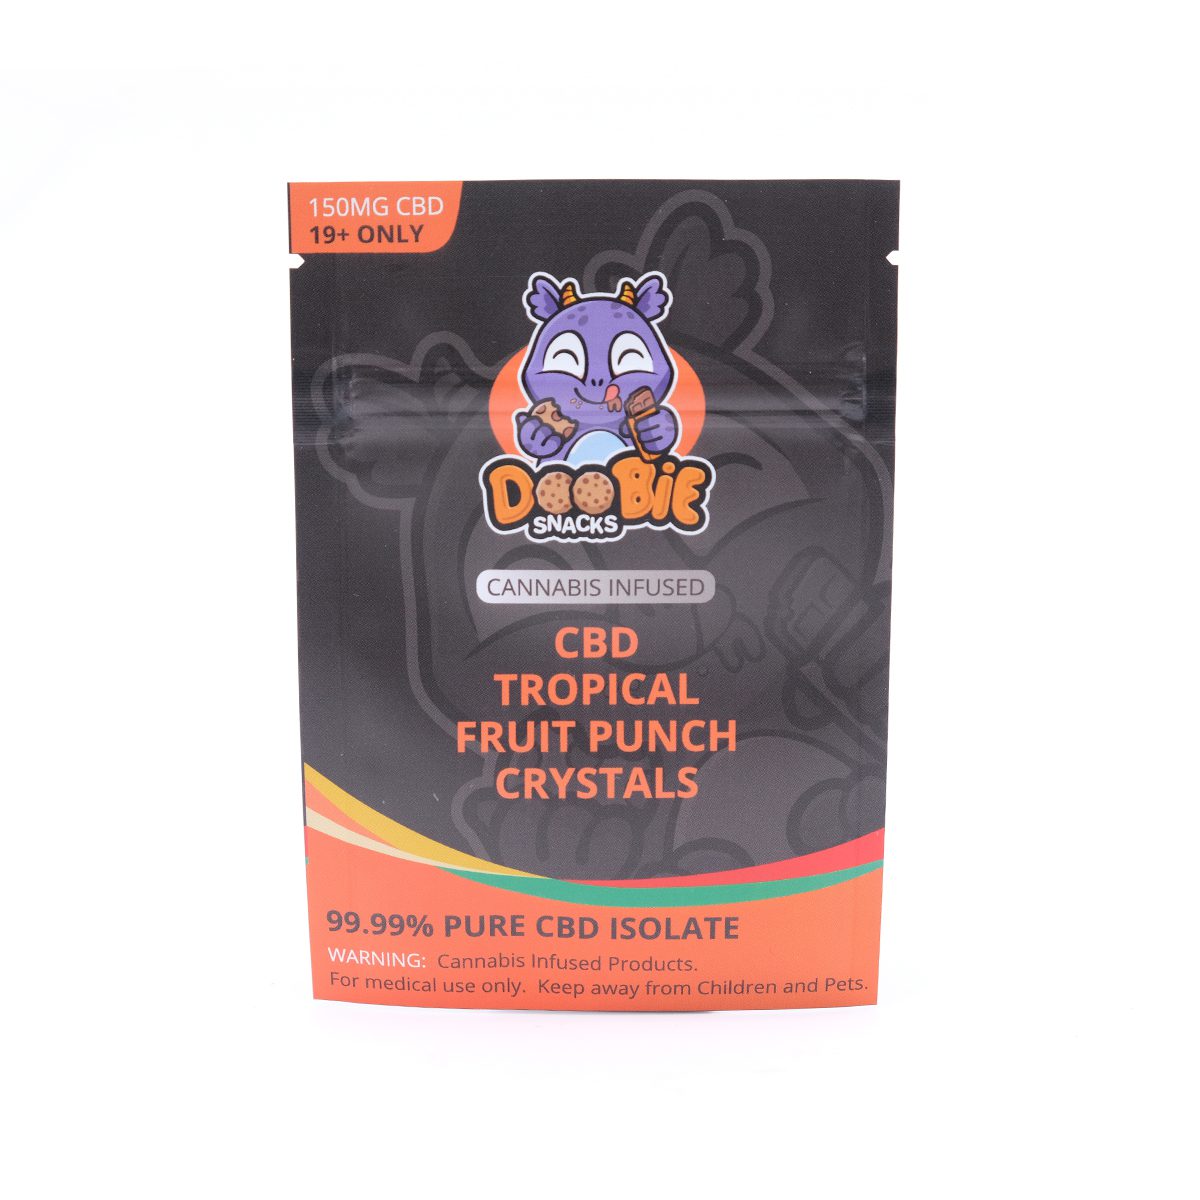 Tropical Fruit Punch Crystal Mix 150mg CBD By Doobie Snacks